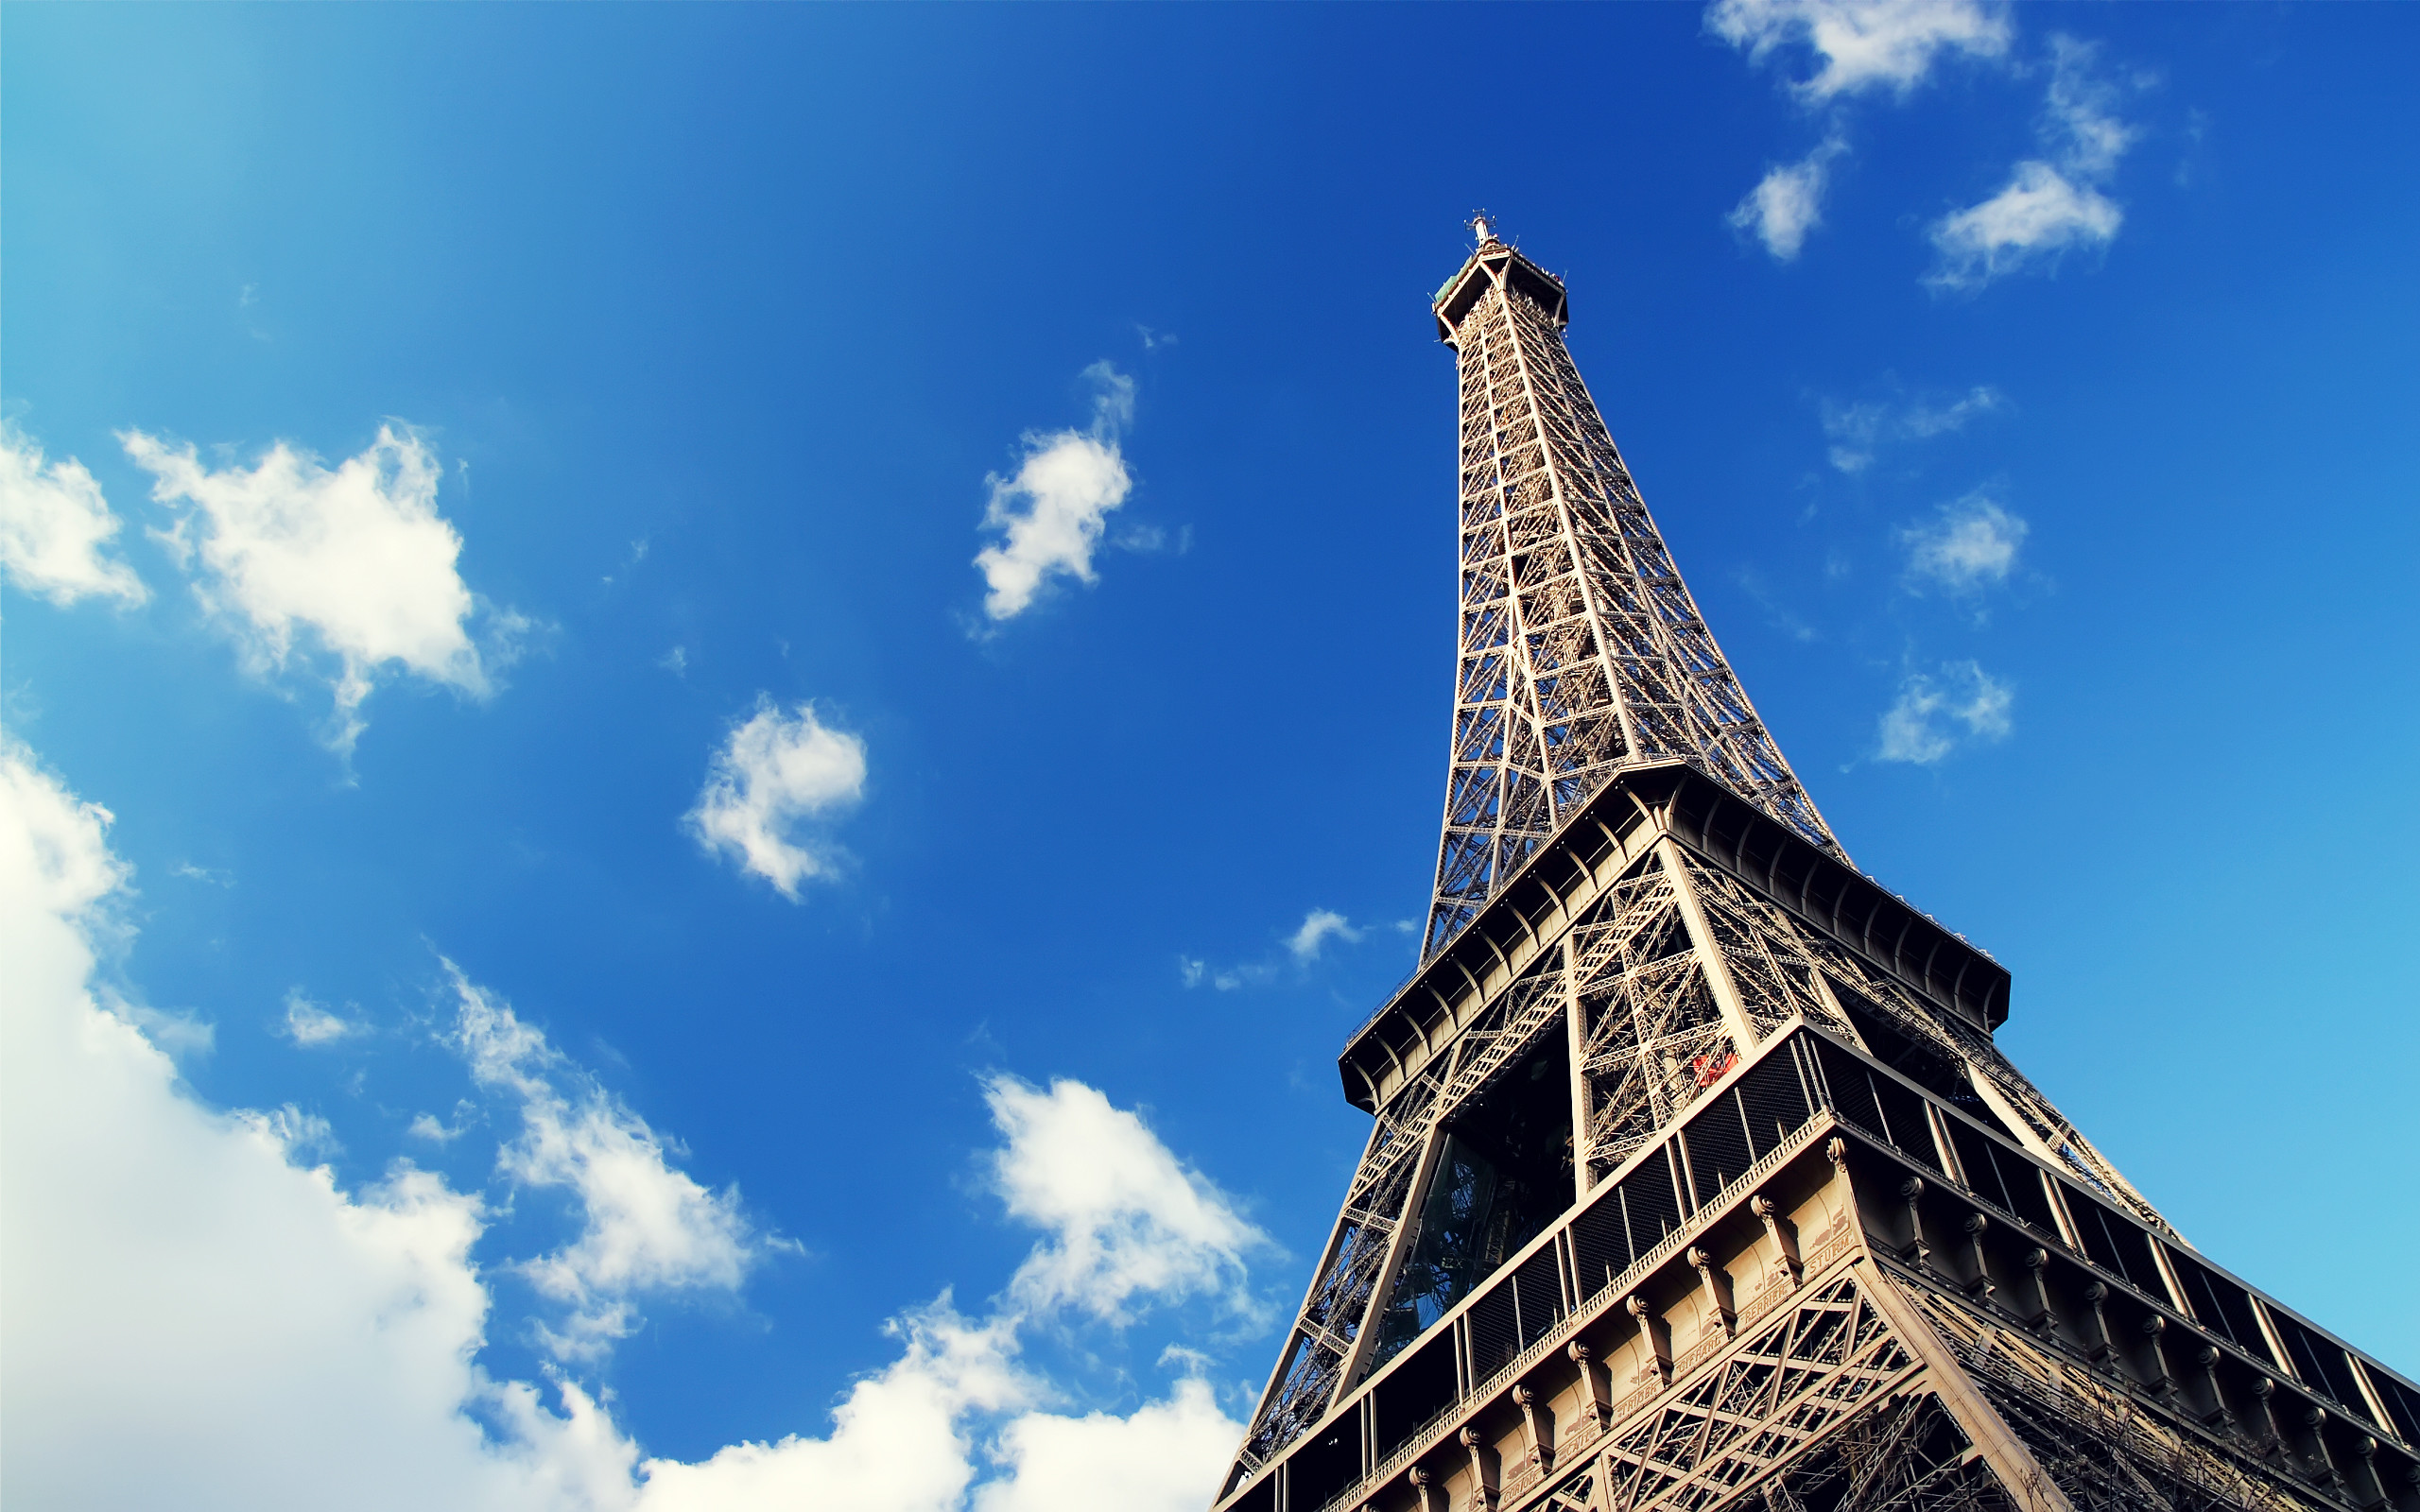 2560x1600 Blue Sky With Eiffel Tower. Blue Sky With Eiffel Tower Desktop Background